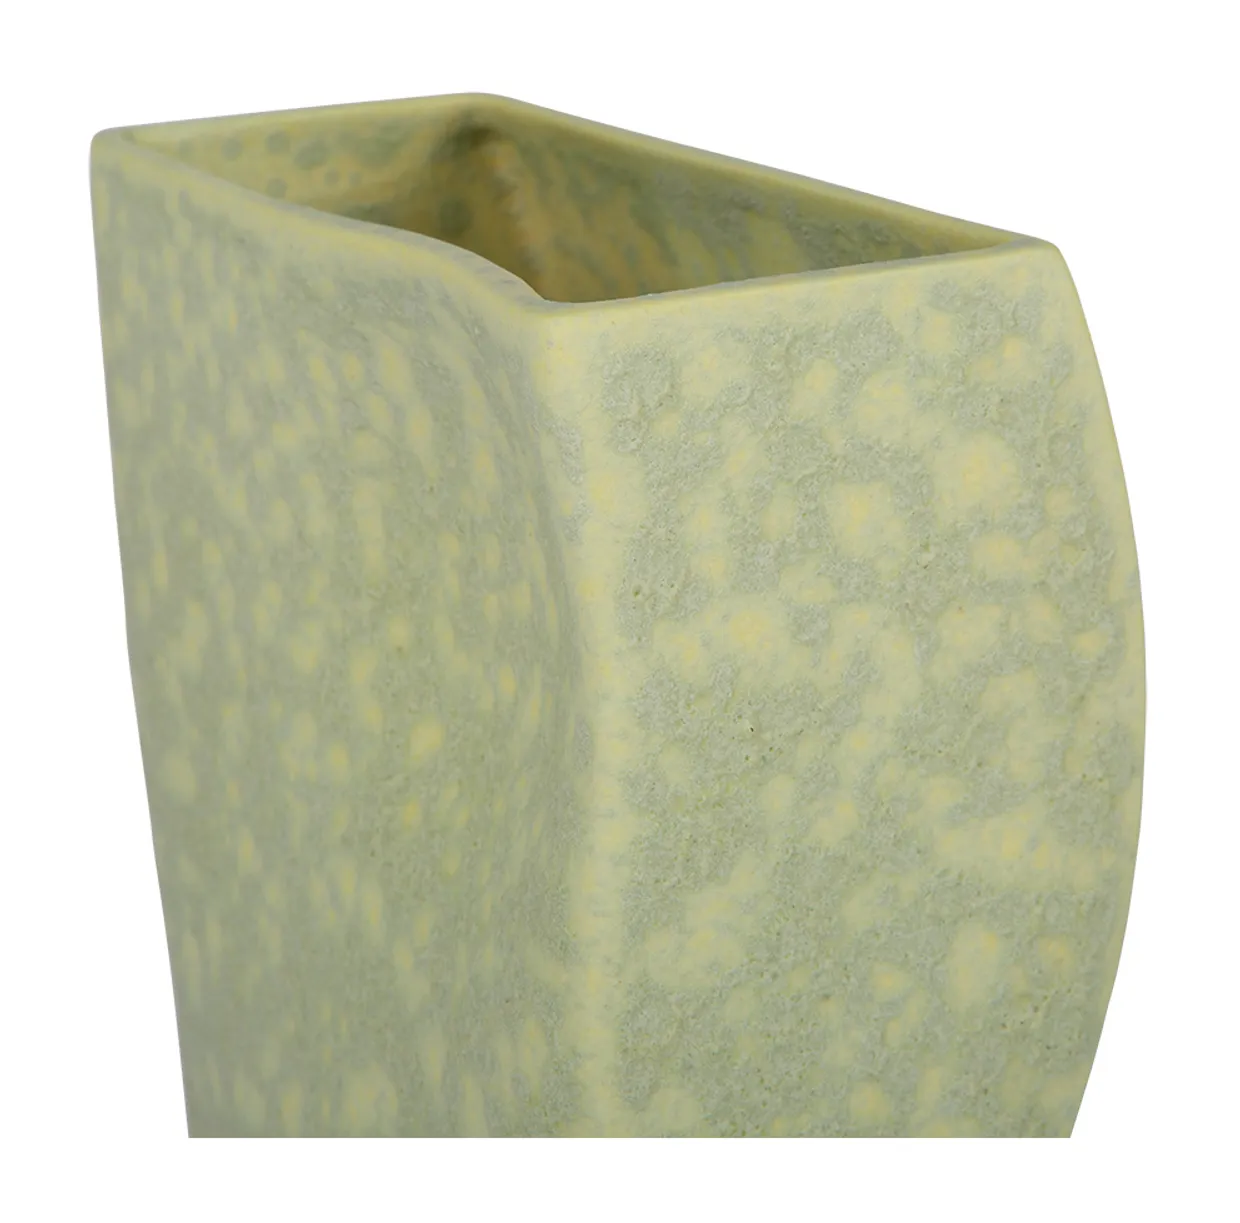 HK objects: ceramic block vase matt pistachio